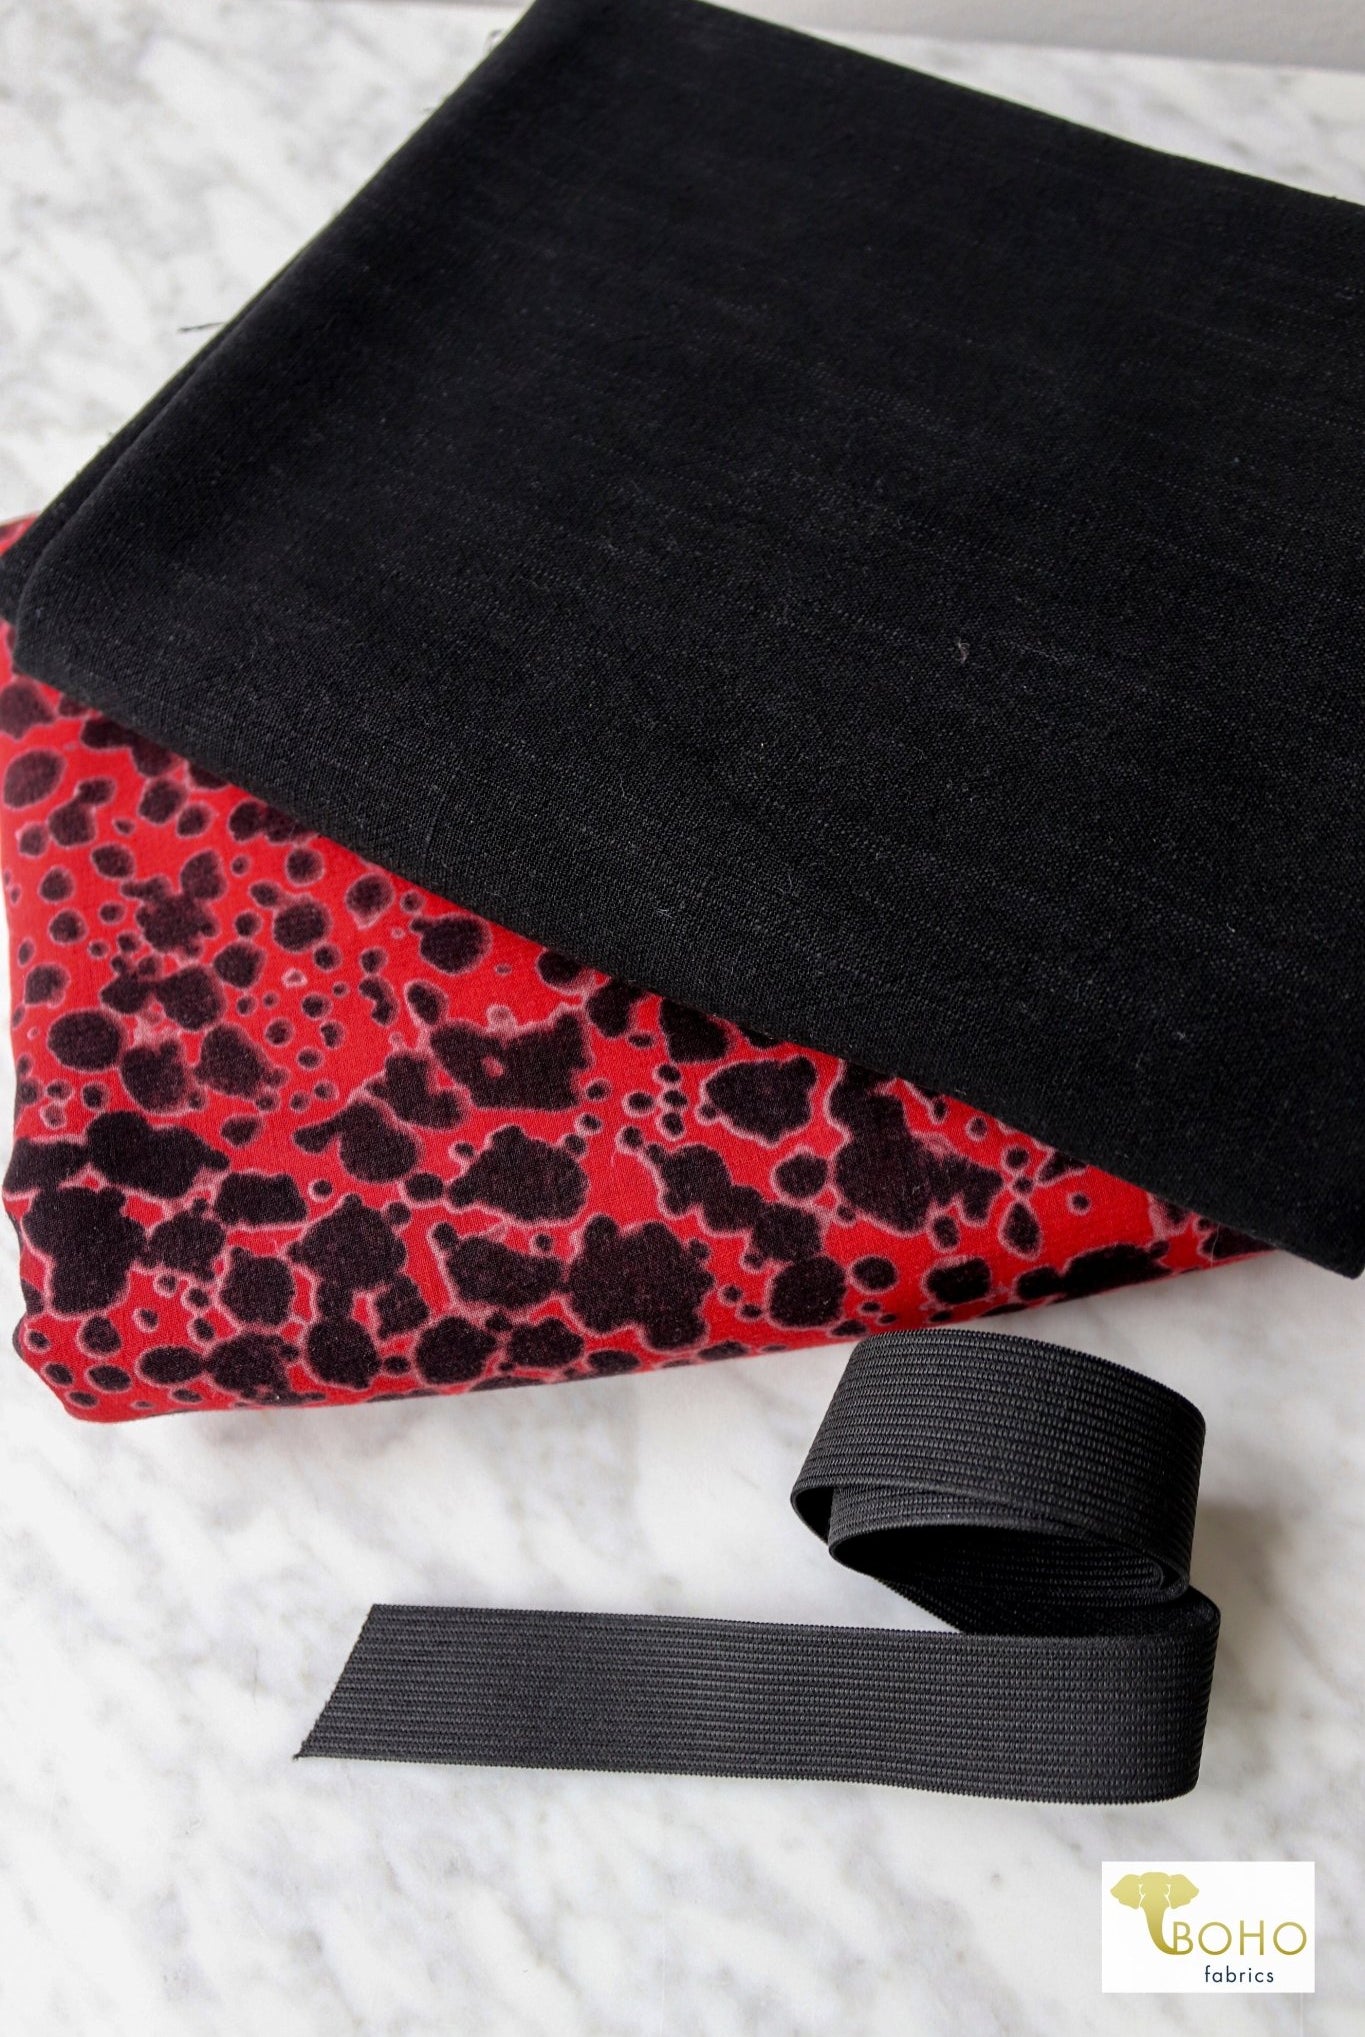 04/30/2024 Fabric Happy Hour! Black Linen & Ink Blot Woven Bundle. Persephone Release 🎉 - Boho Fabrics - Fabric Bundles